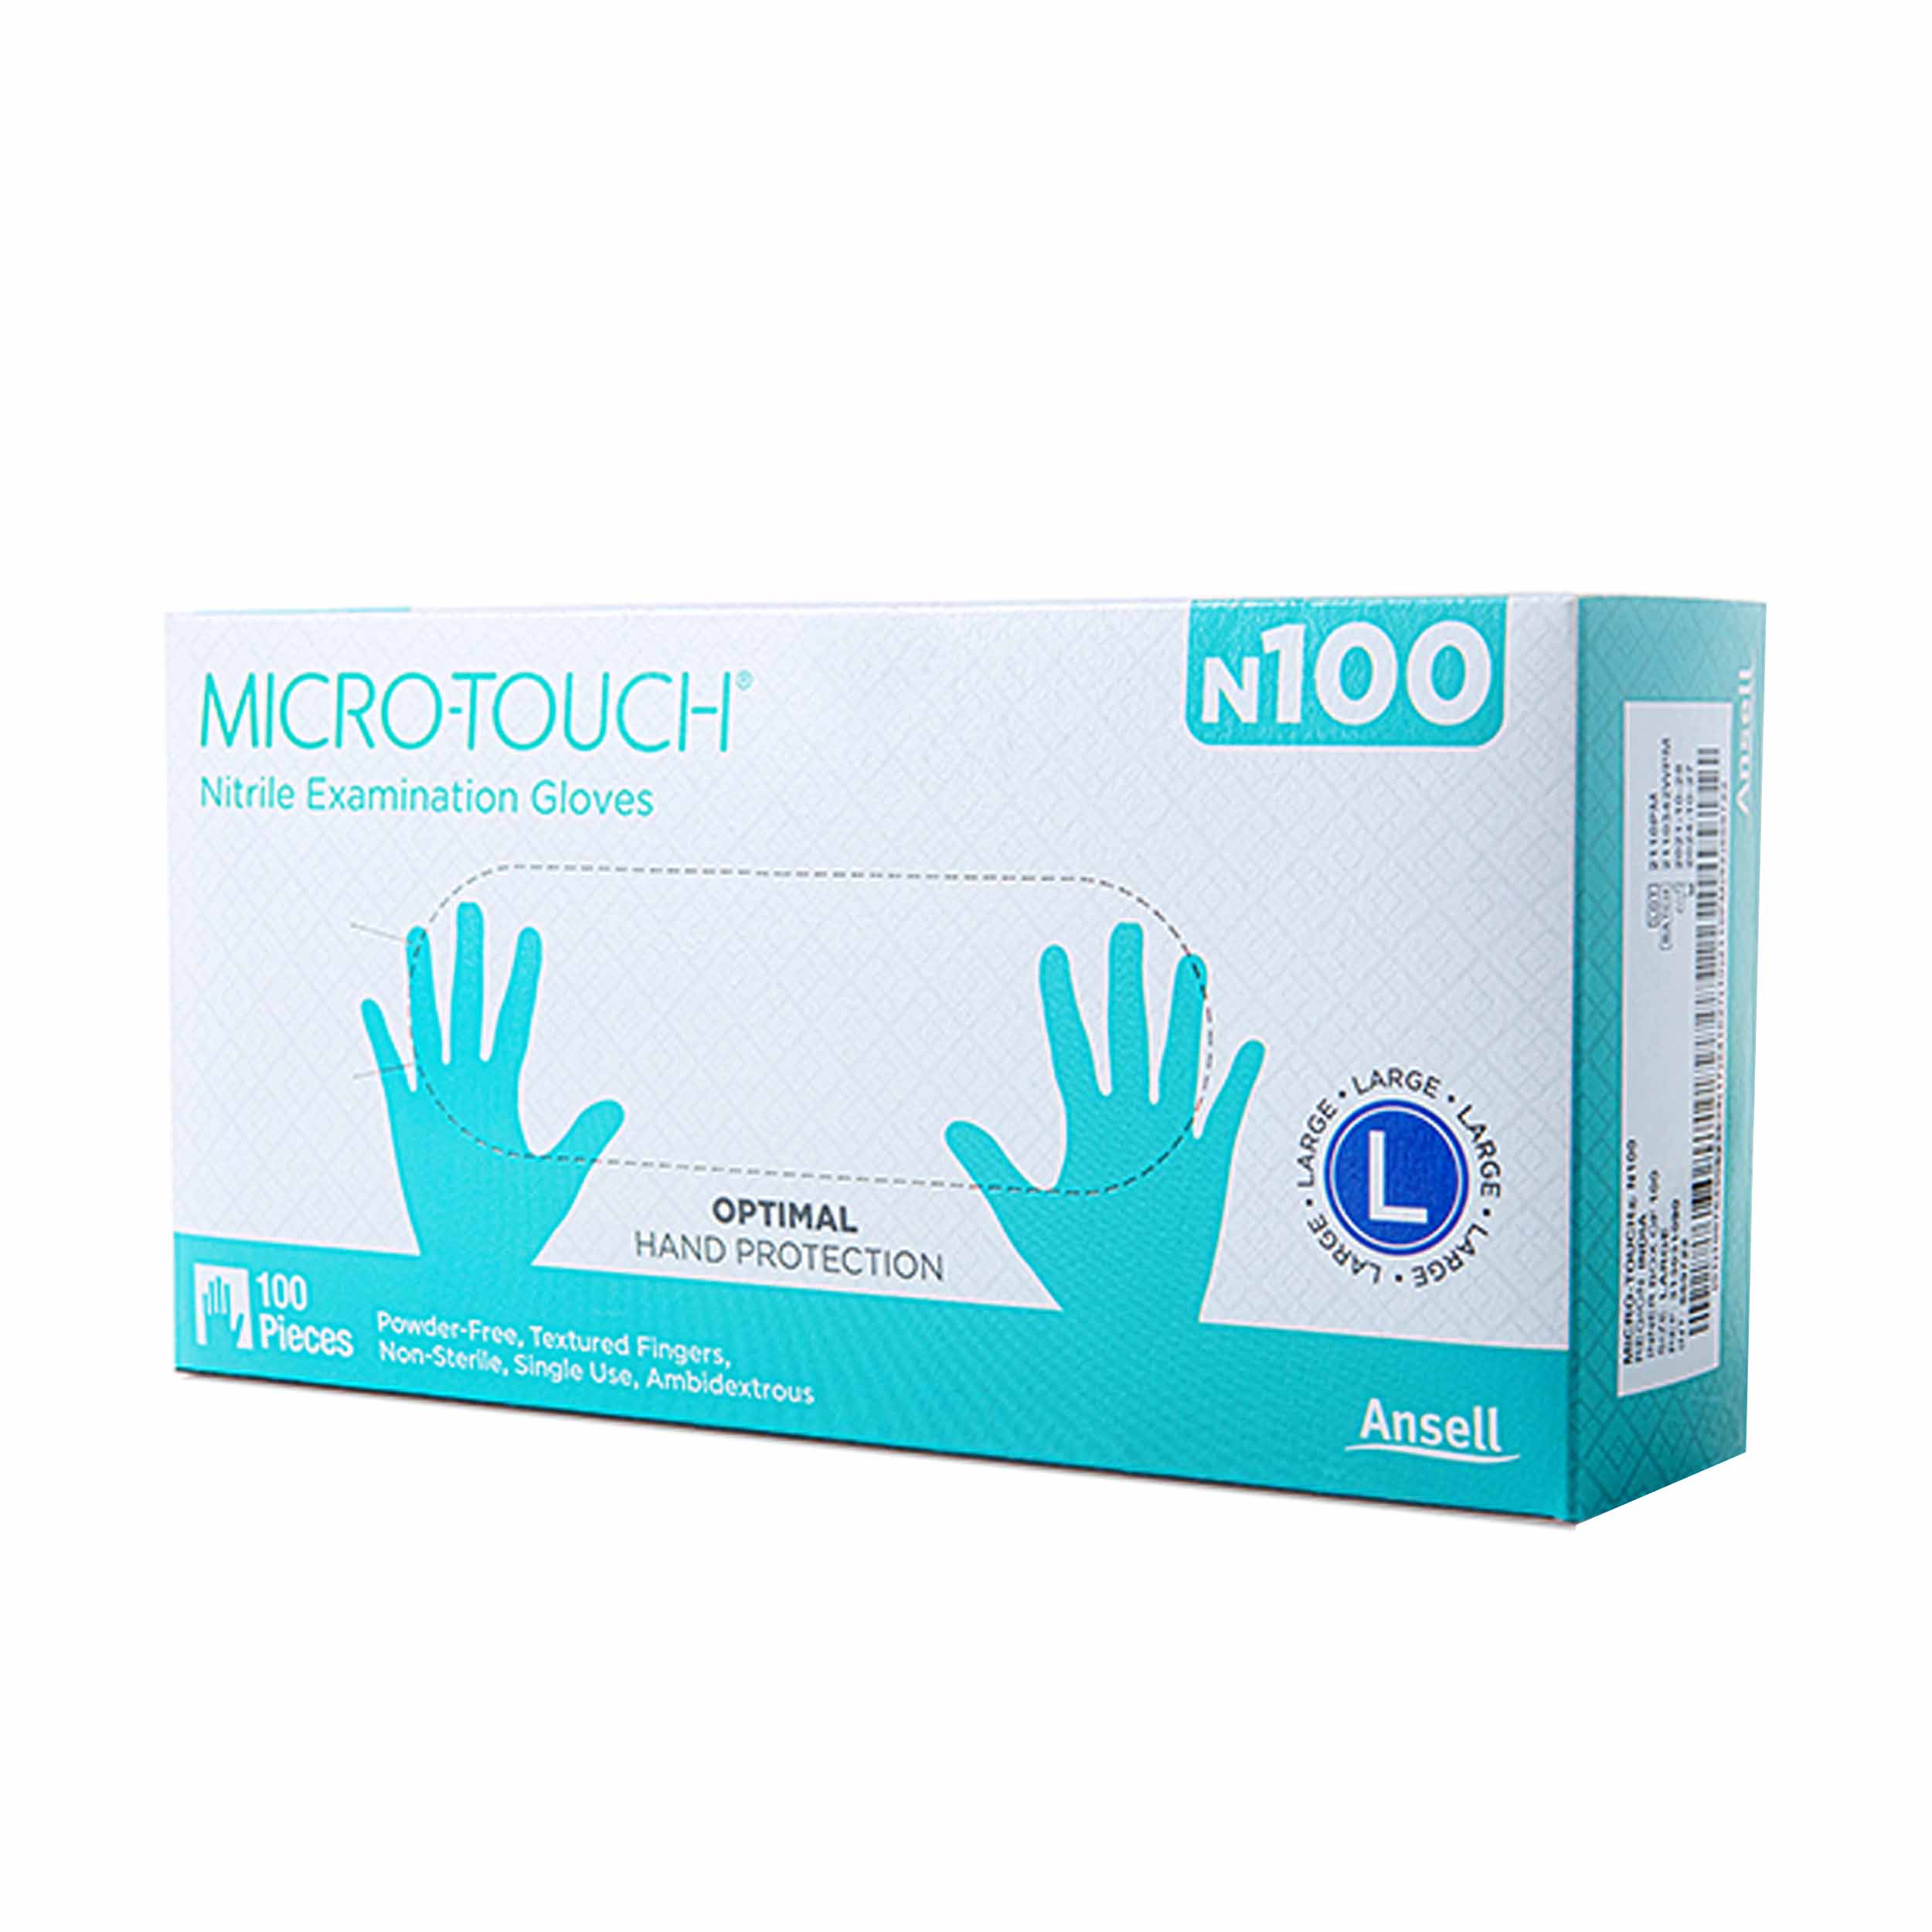 Ansell Micro Touch Nitrile Examination Gloves N100 Medium